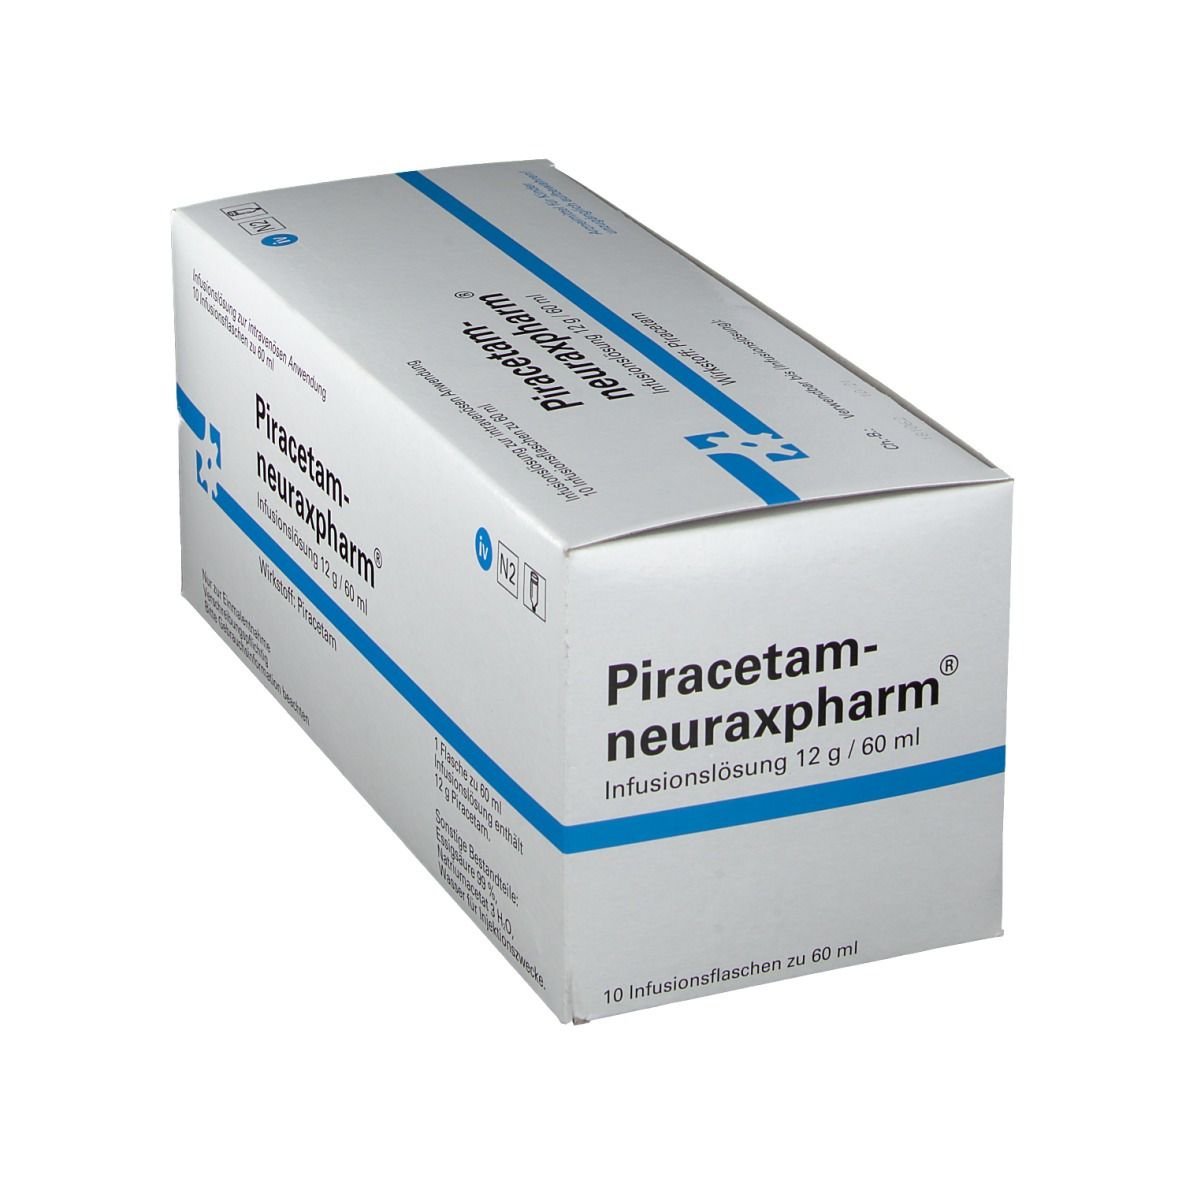 Piracetam-neuraxpharm® 12 g/60 ml